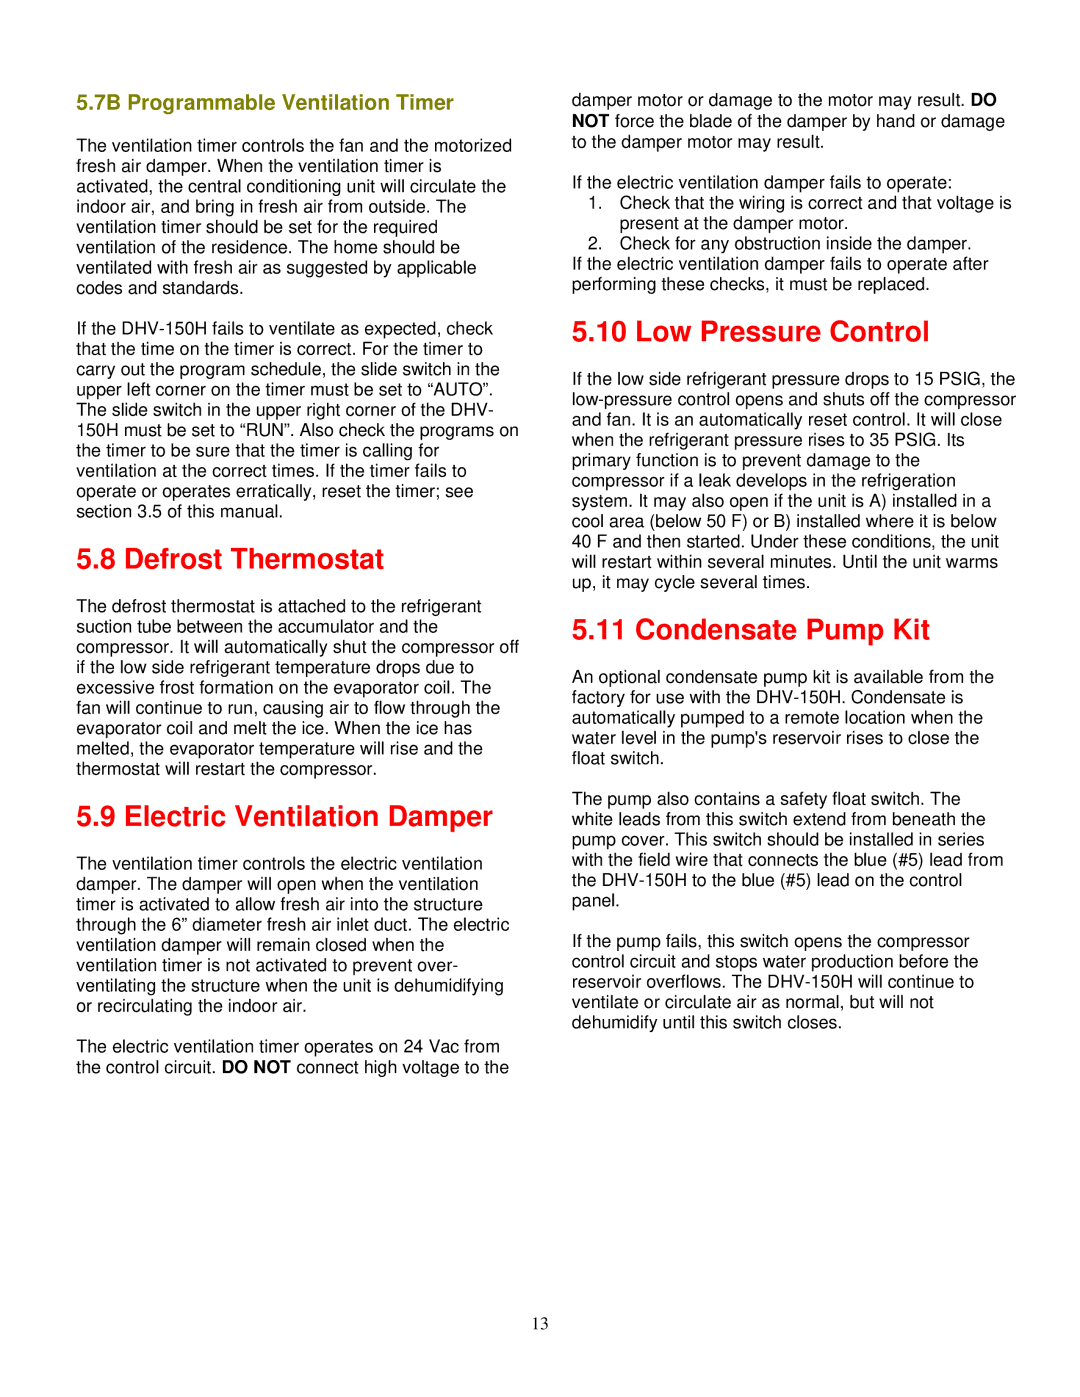 American Aldes DHV-150H specifications Defrost Thermostat, Electric Ventilation Damper, Condensate Pump Kit 